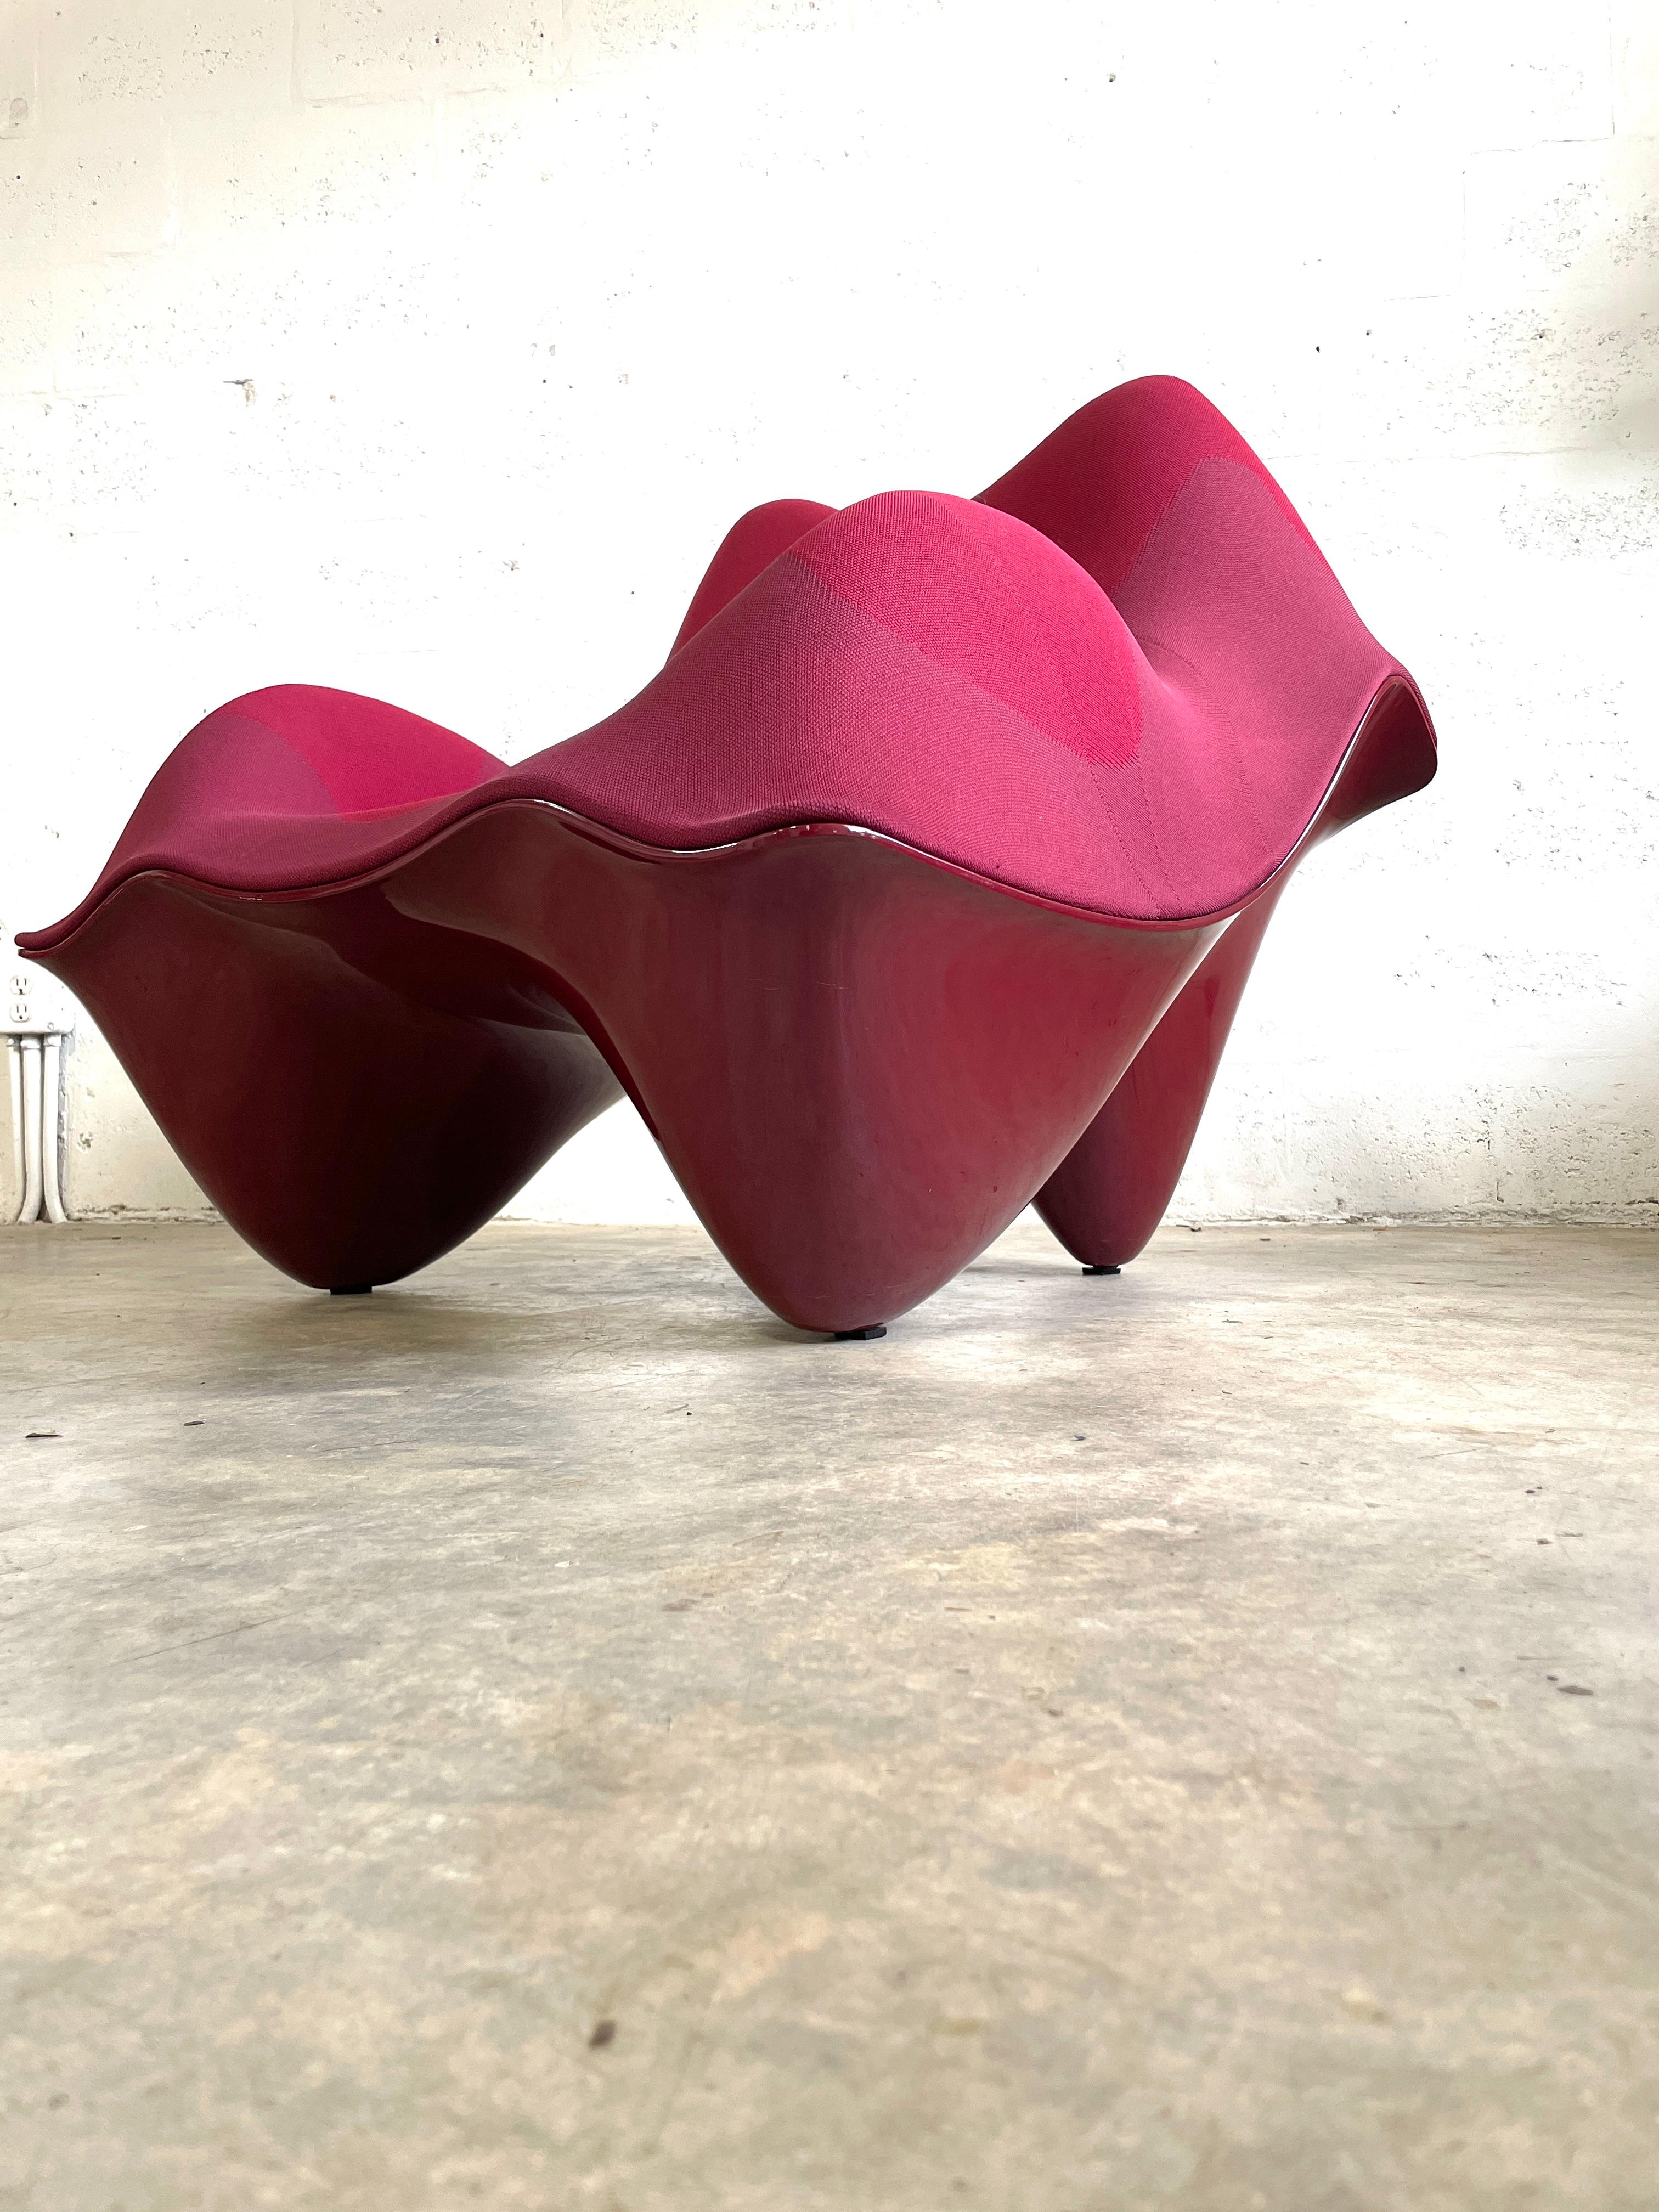 Swiss Greg Lynn “Ravioli” Chair by Vitra For Sale